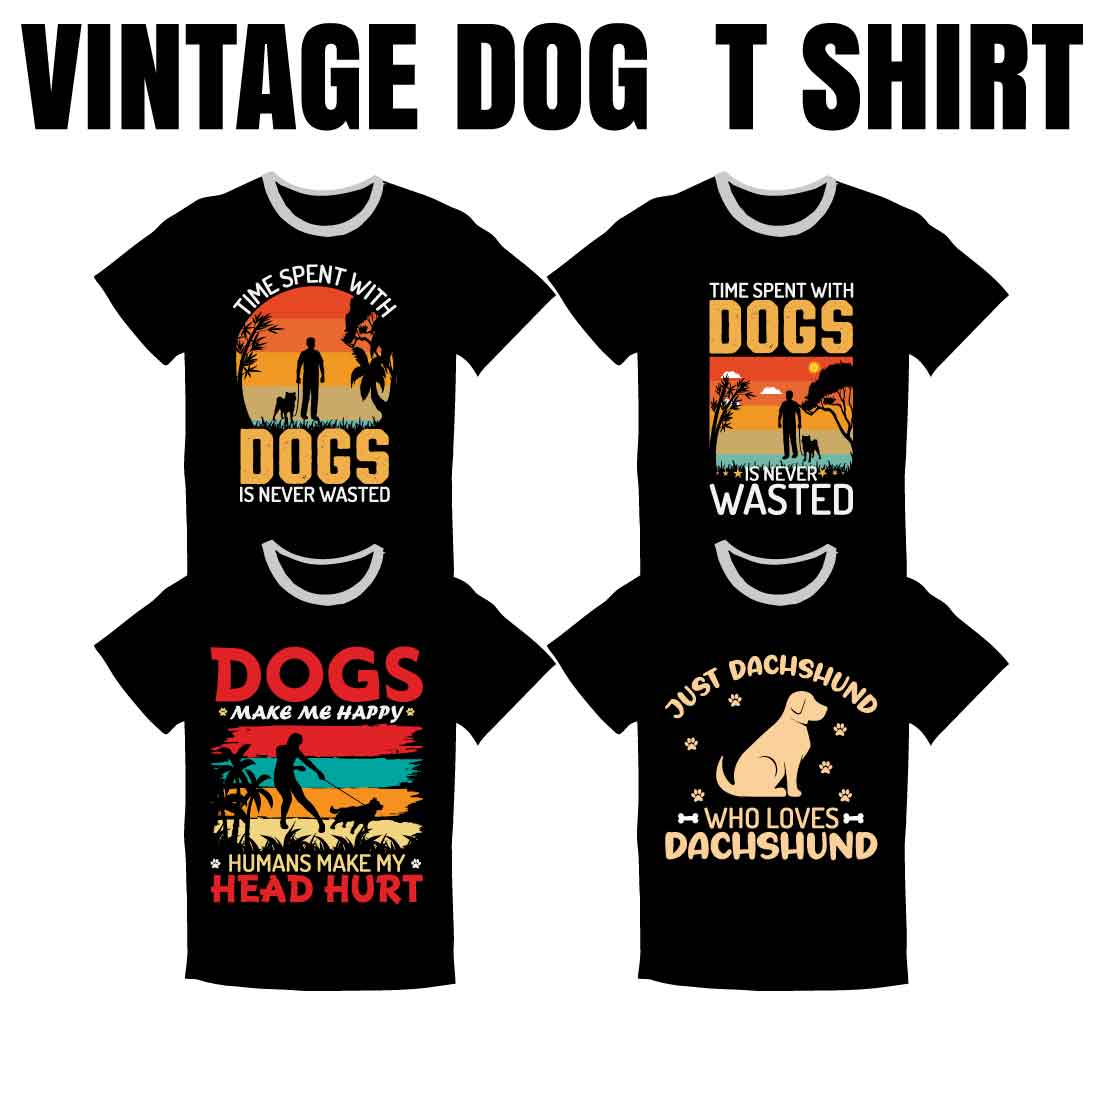 15 Dog Vintage T-shirt Bundle example preview.